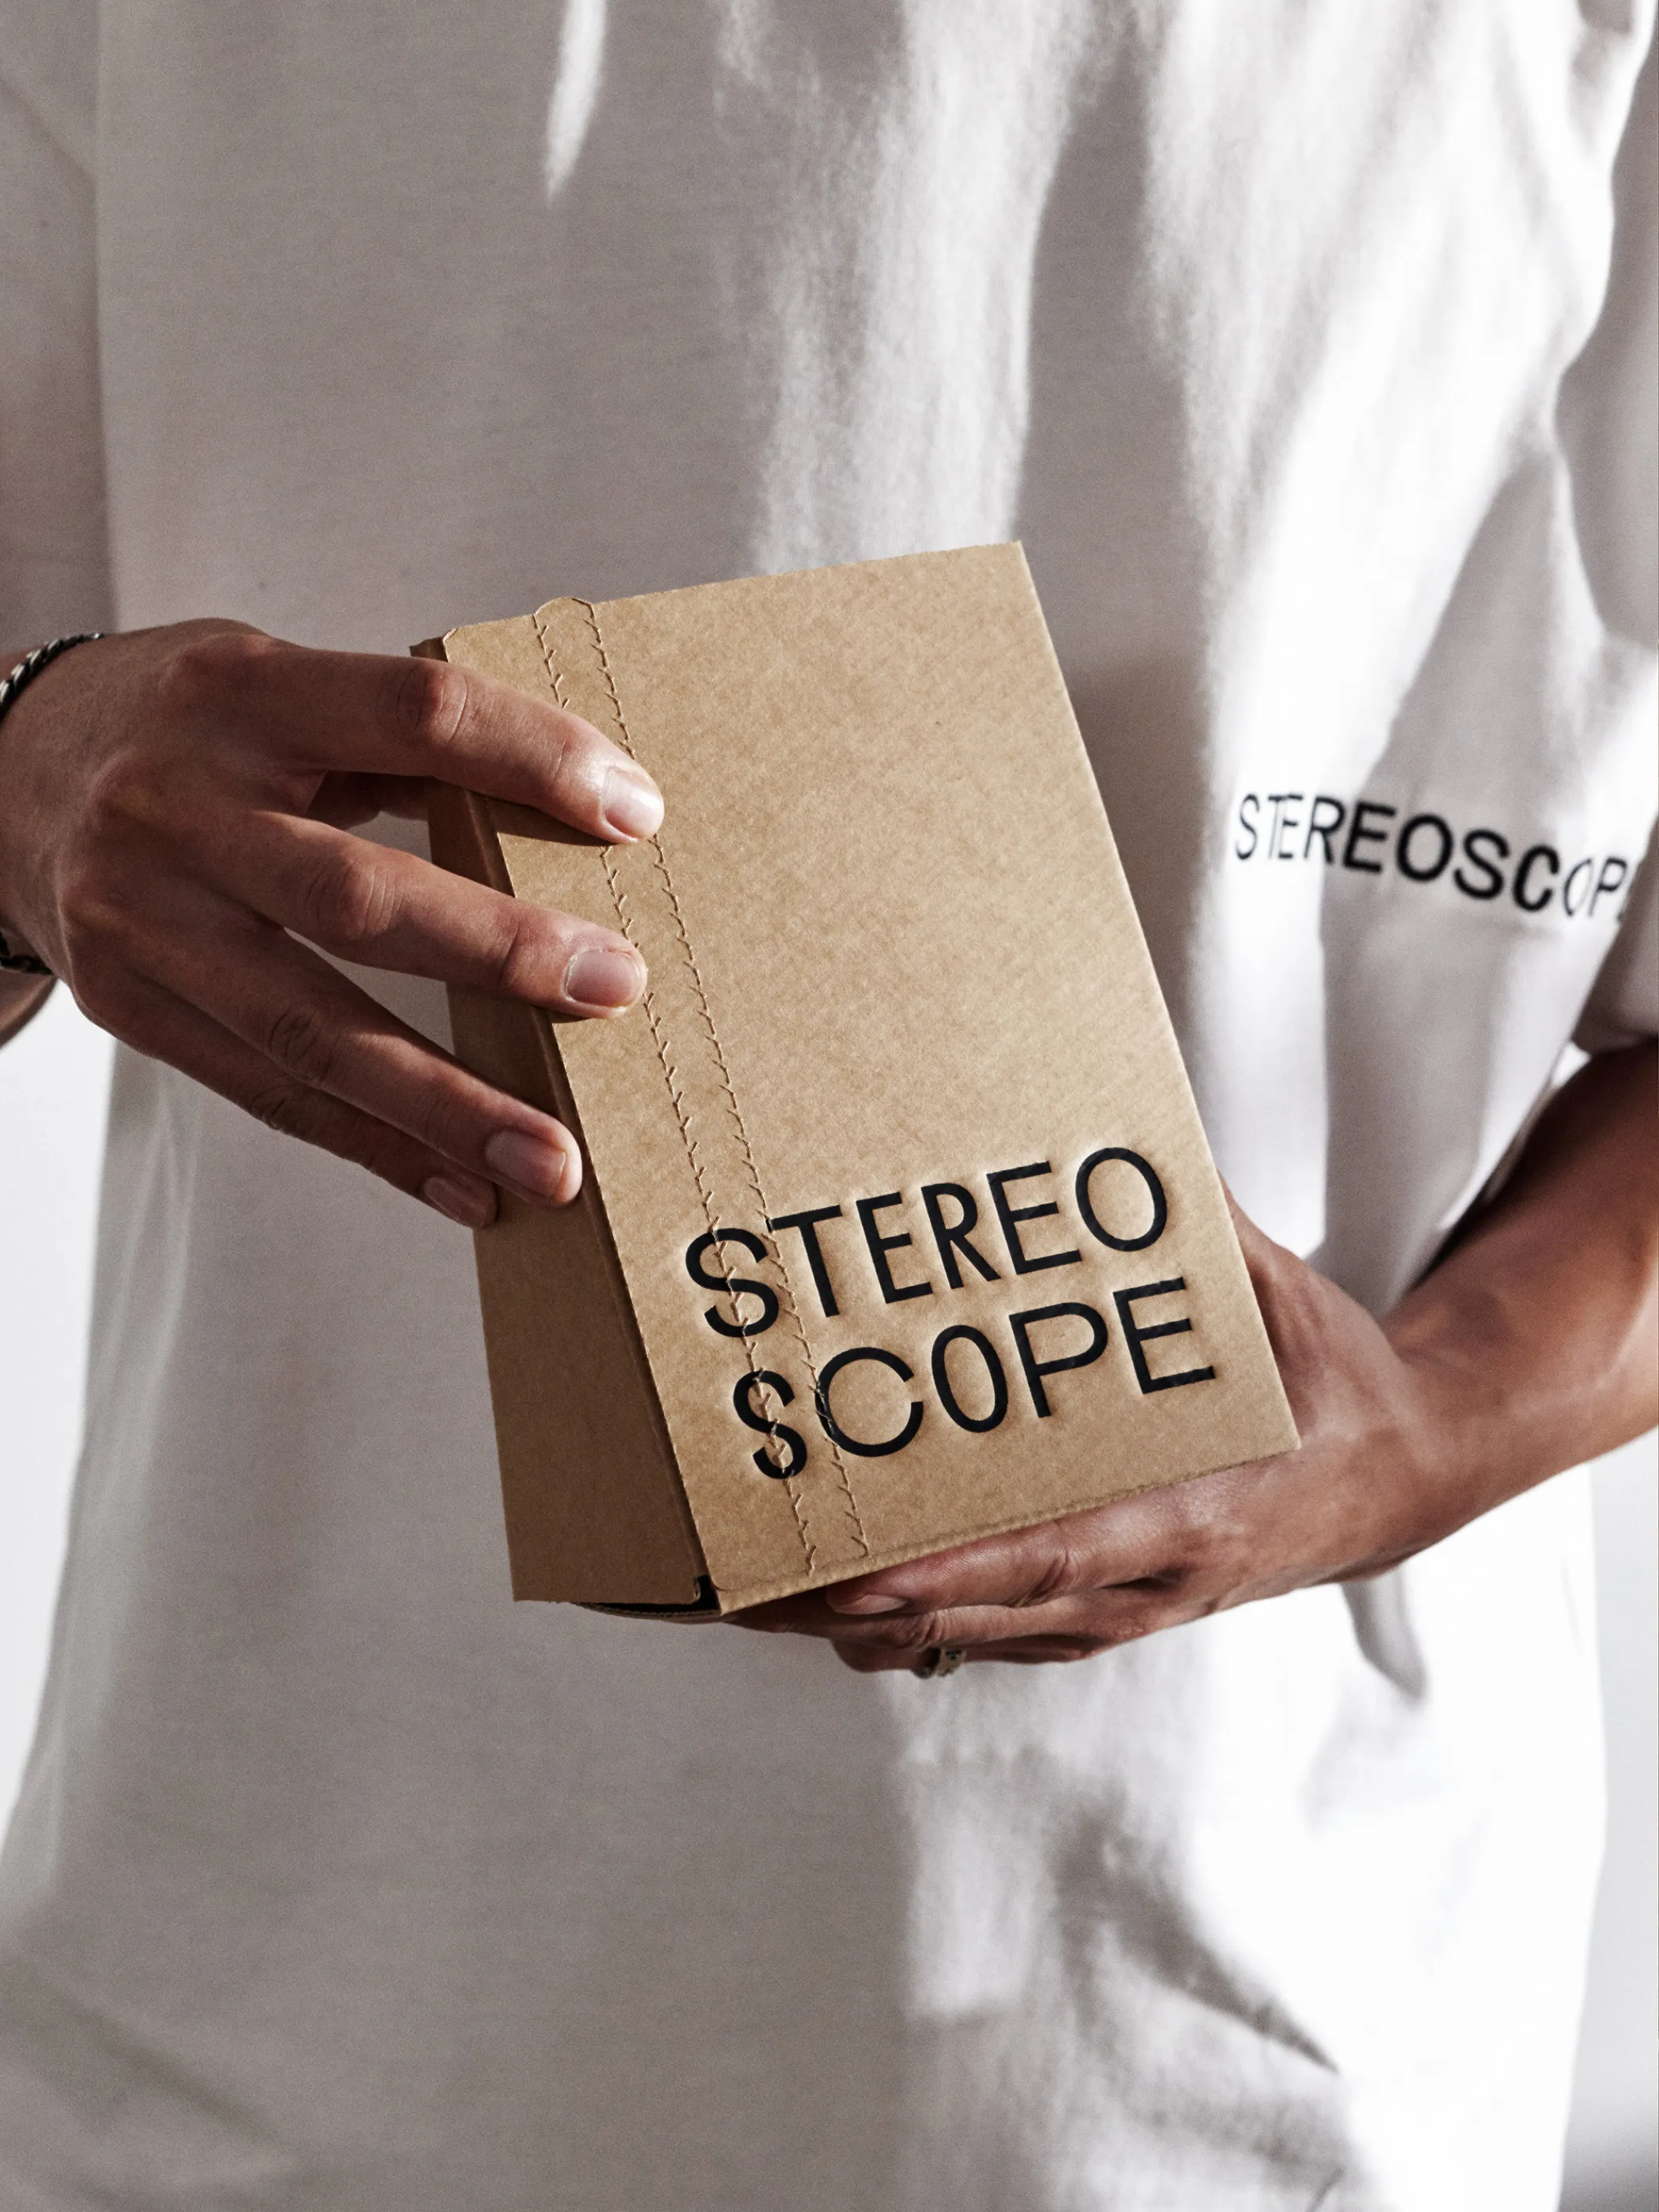 Stereoscope – Design Everywhere